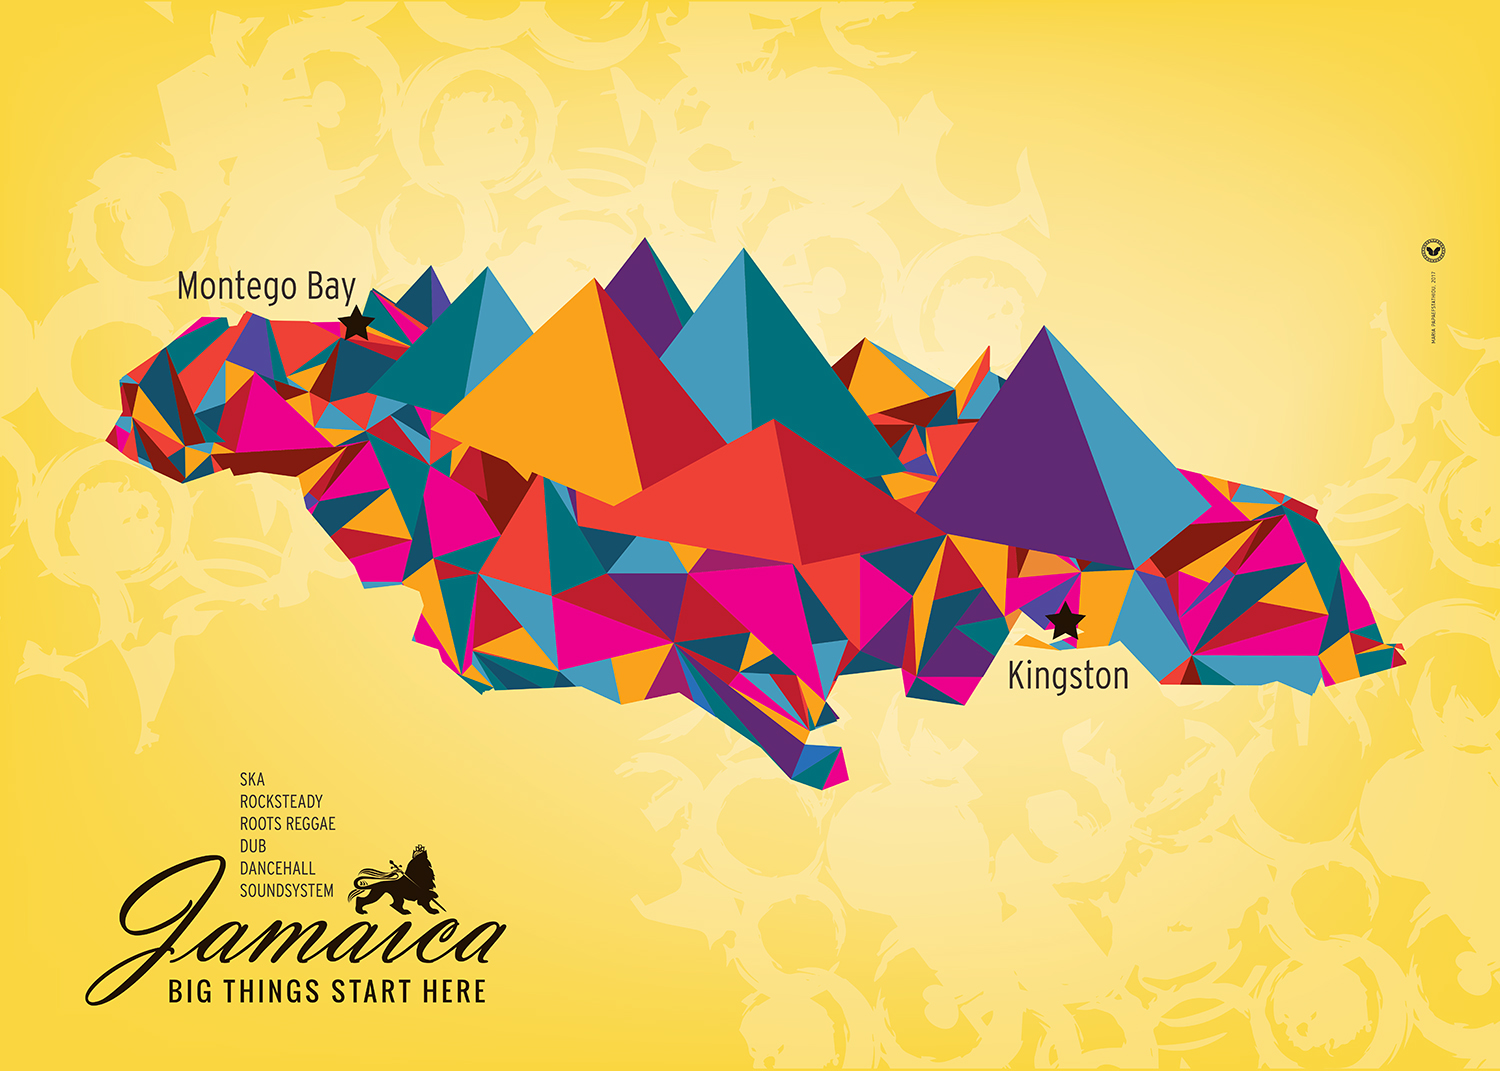 Jamaica Map by Maria Papaefstathiou